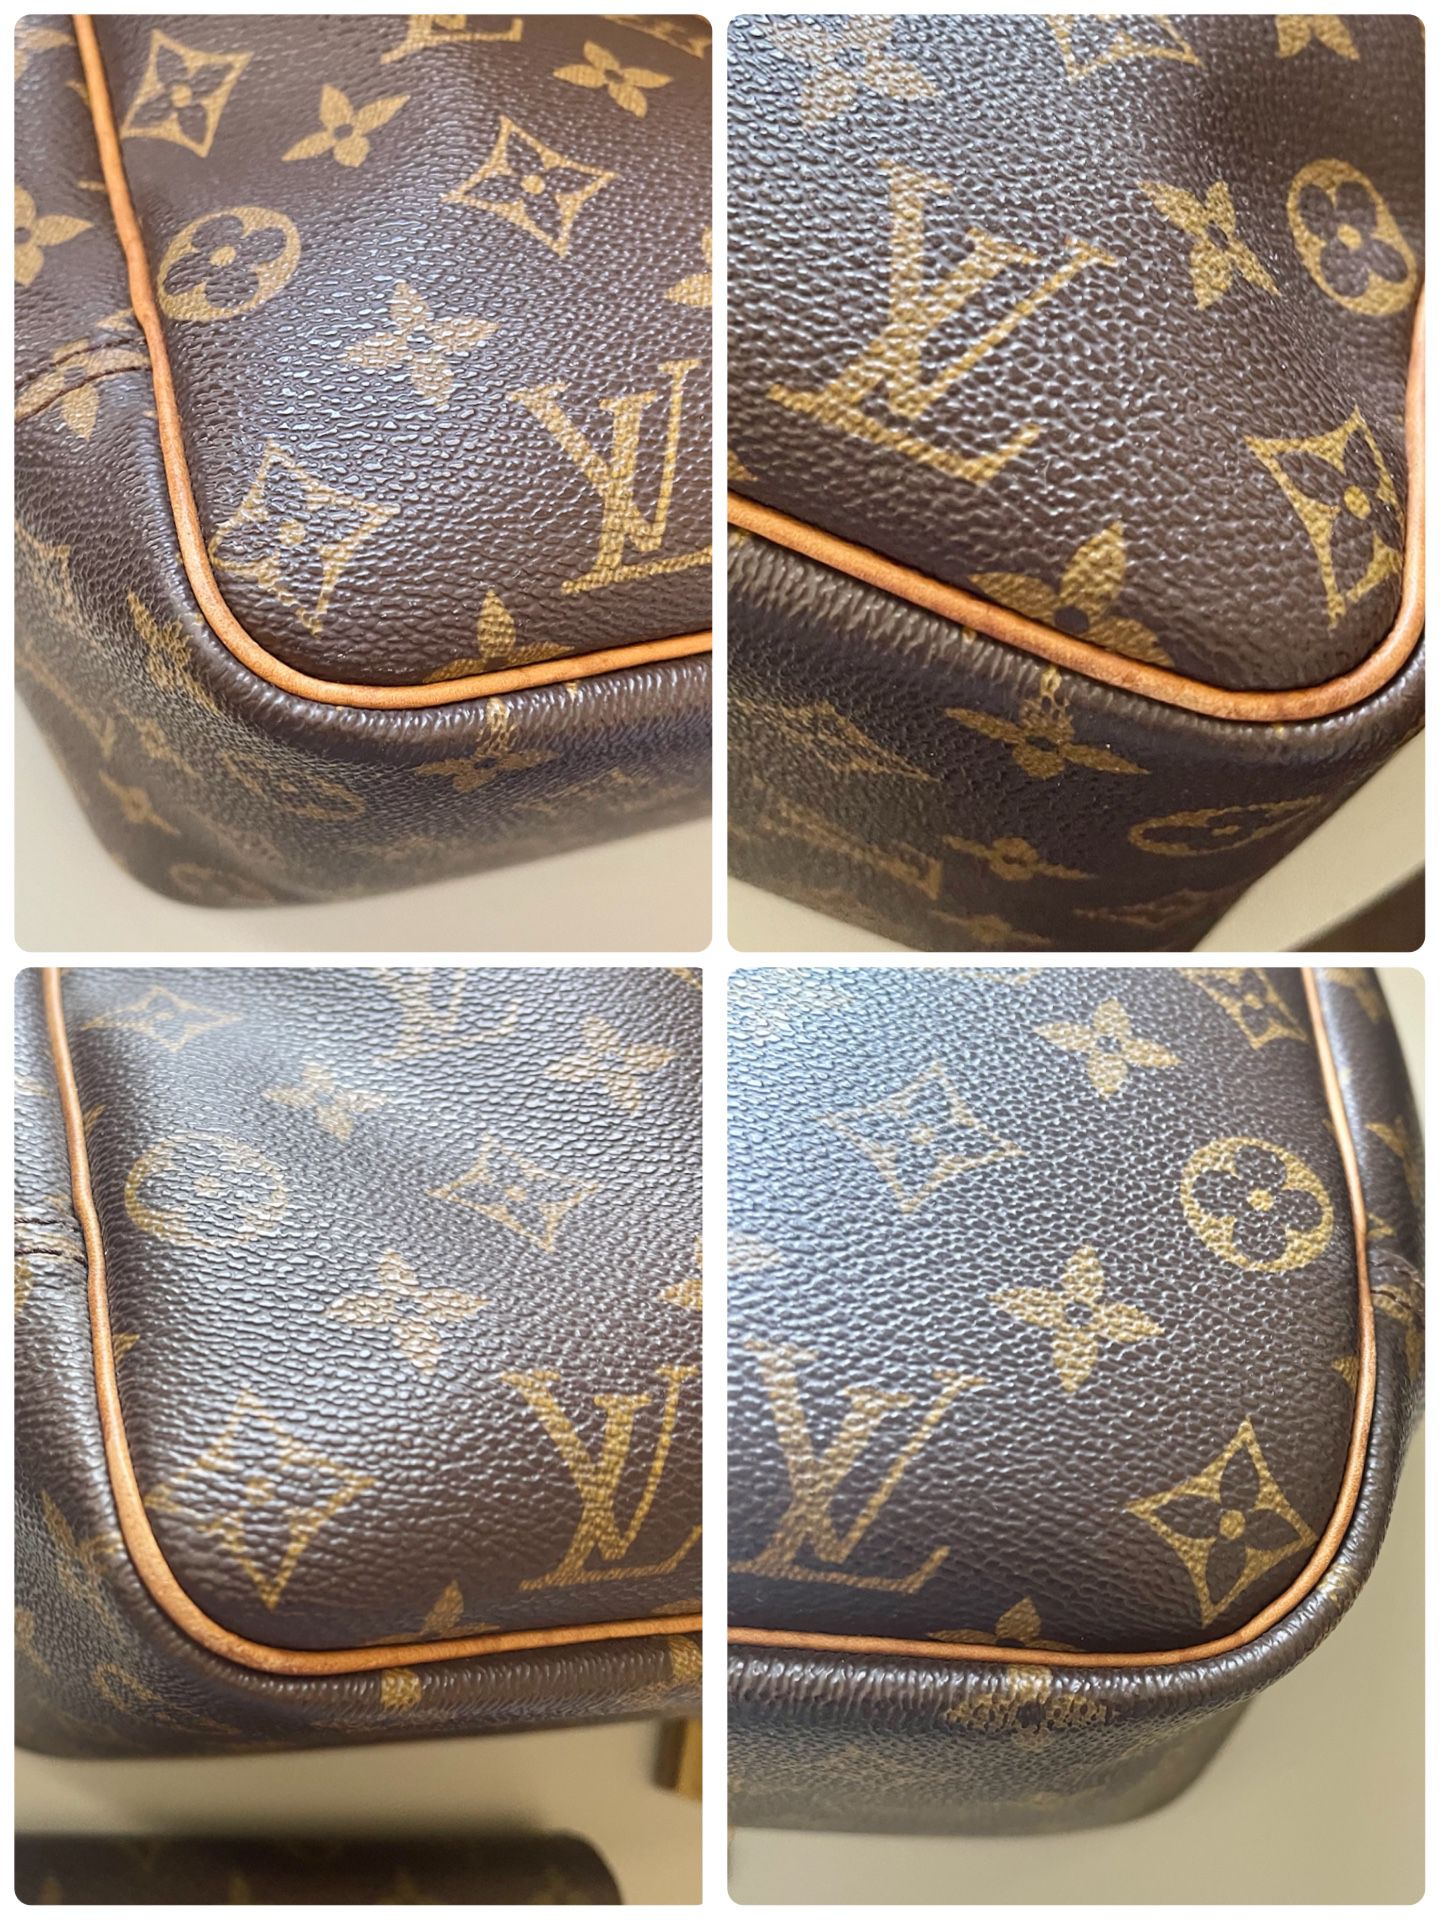 Authentic Louis Vuitton Handbag for Sale in Anaheim, CA - OfferUp